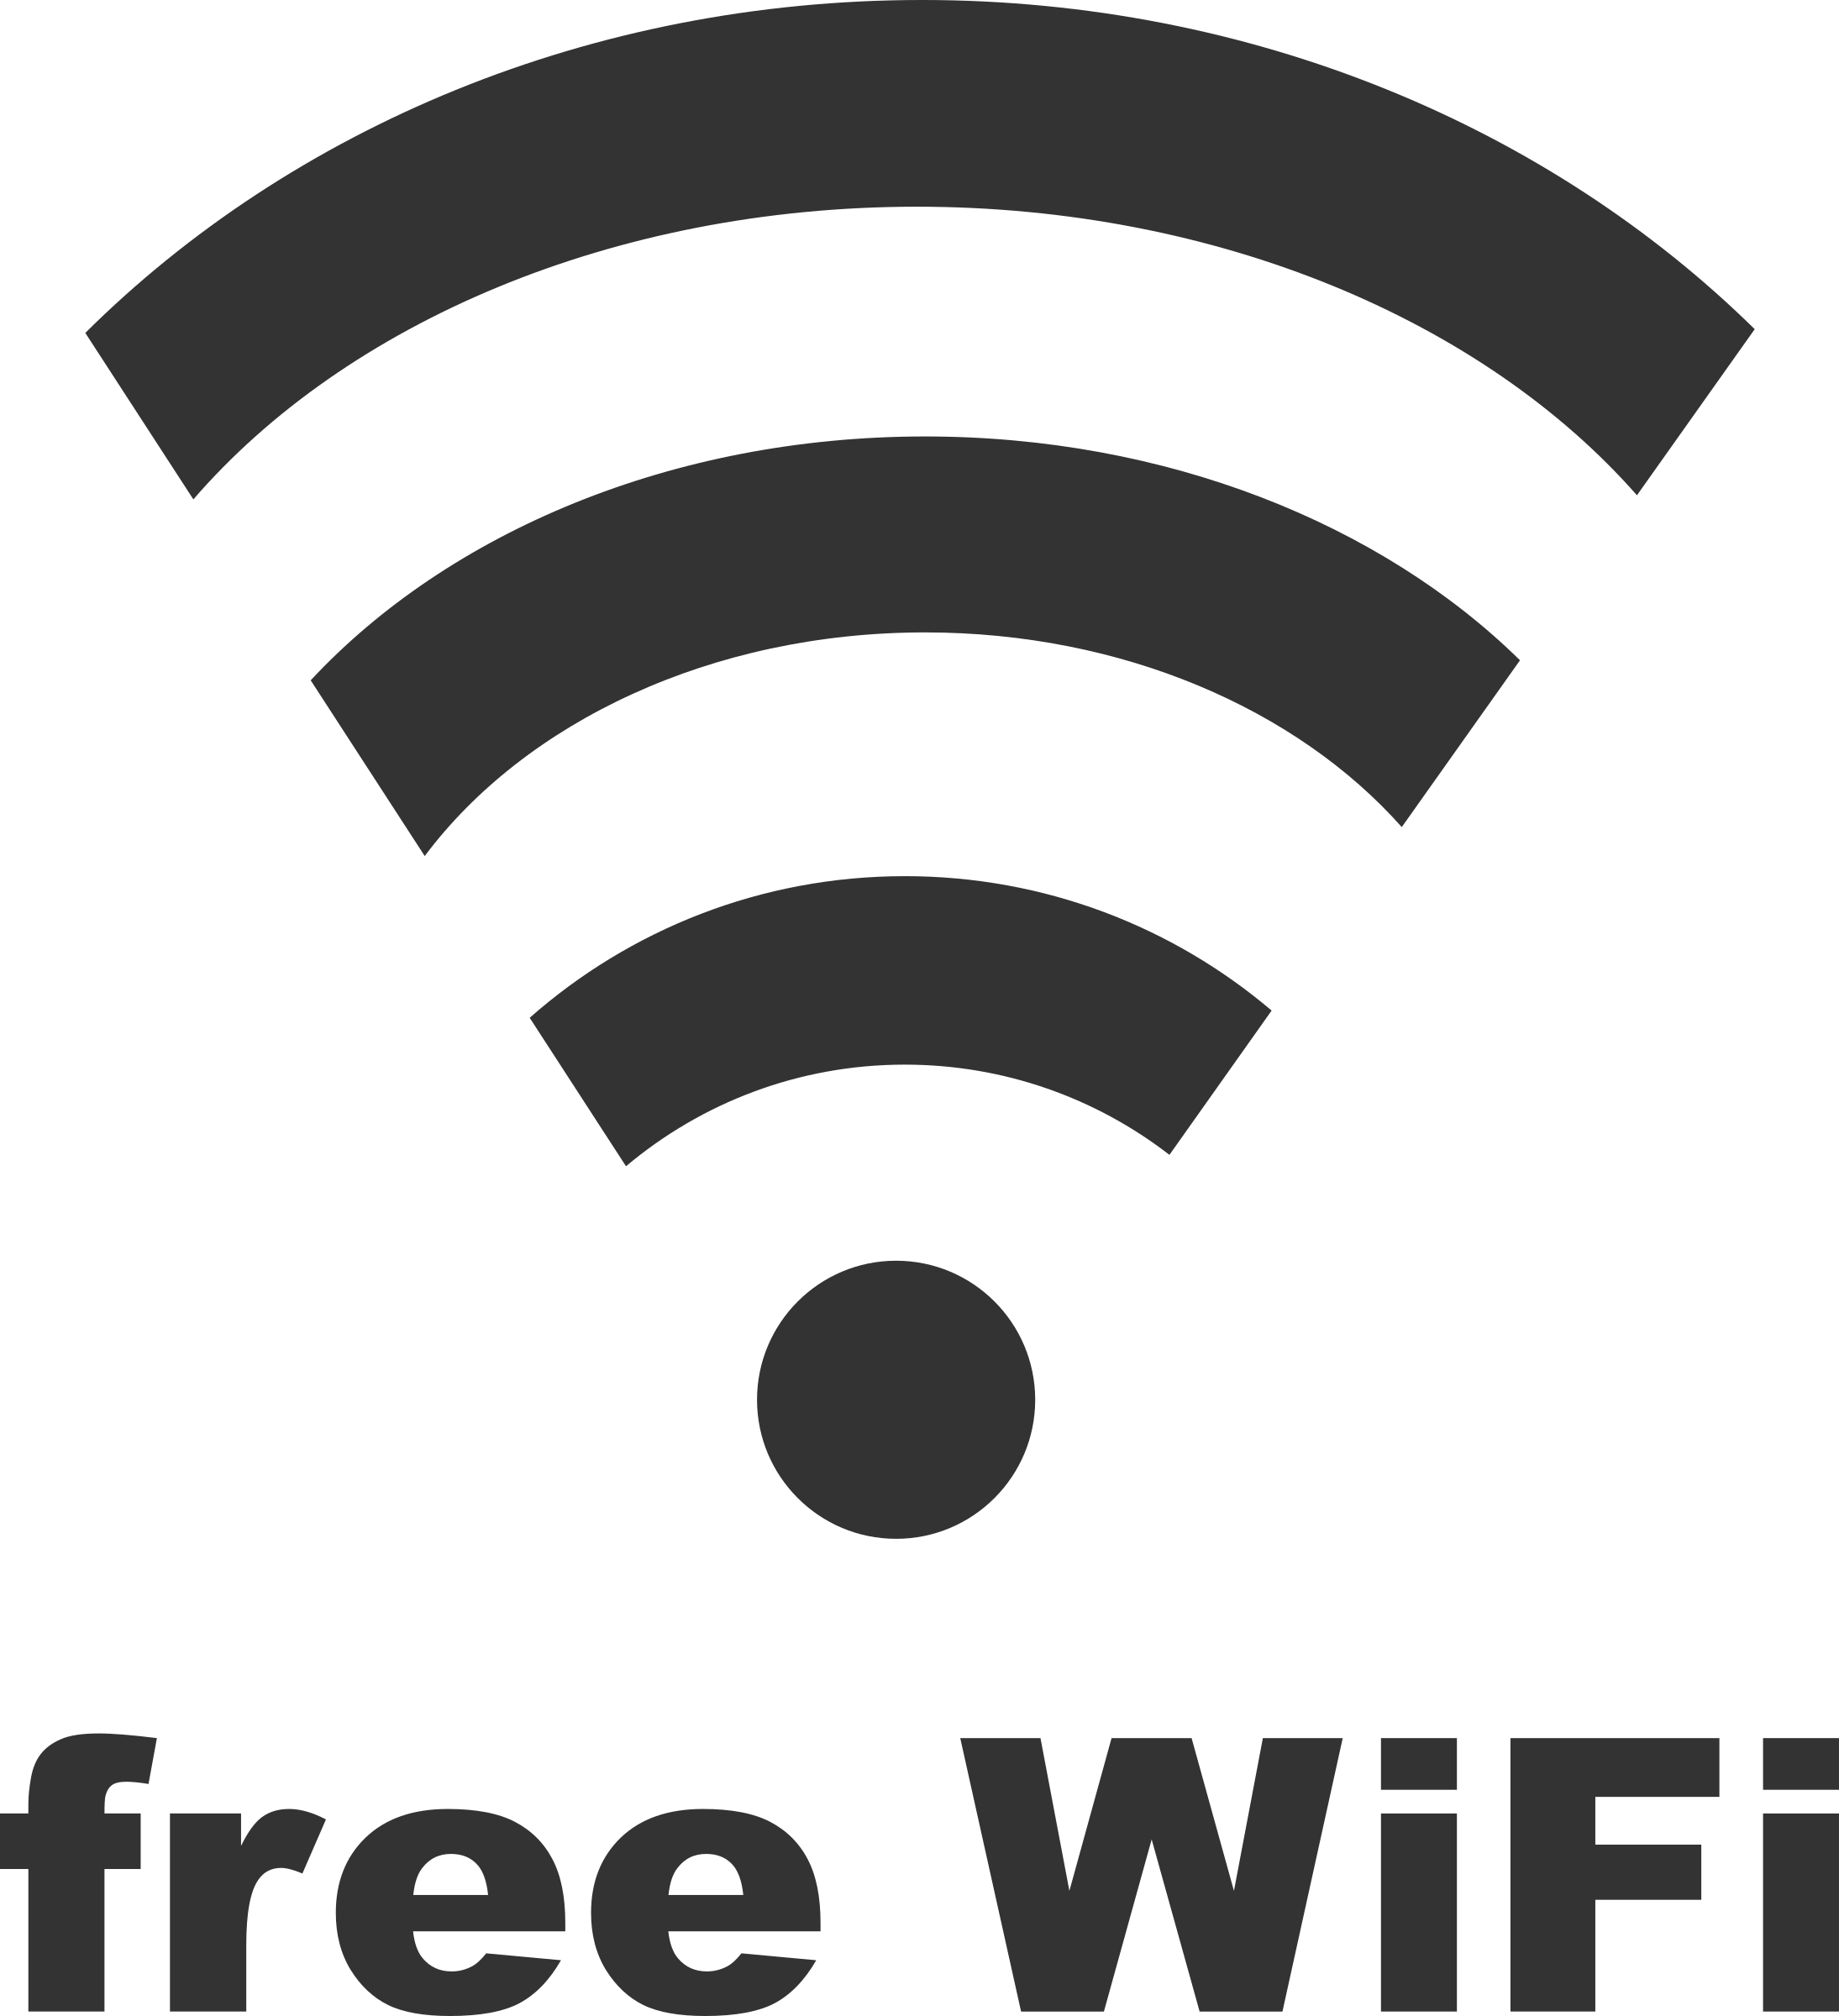 internet clipart symbol wifi